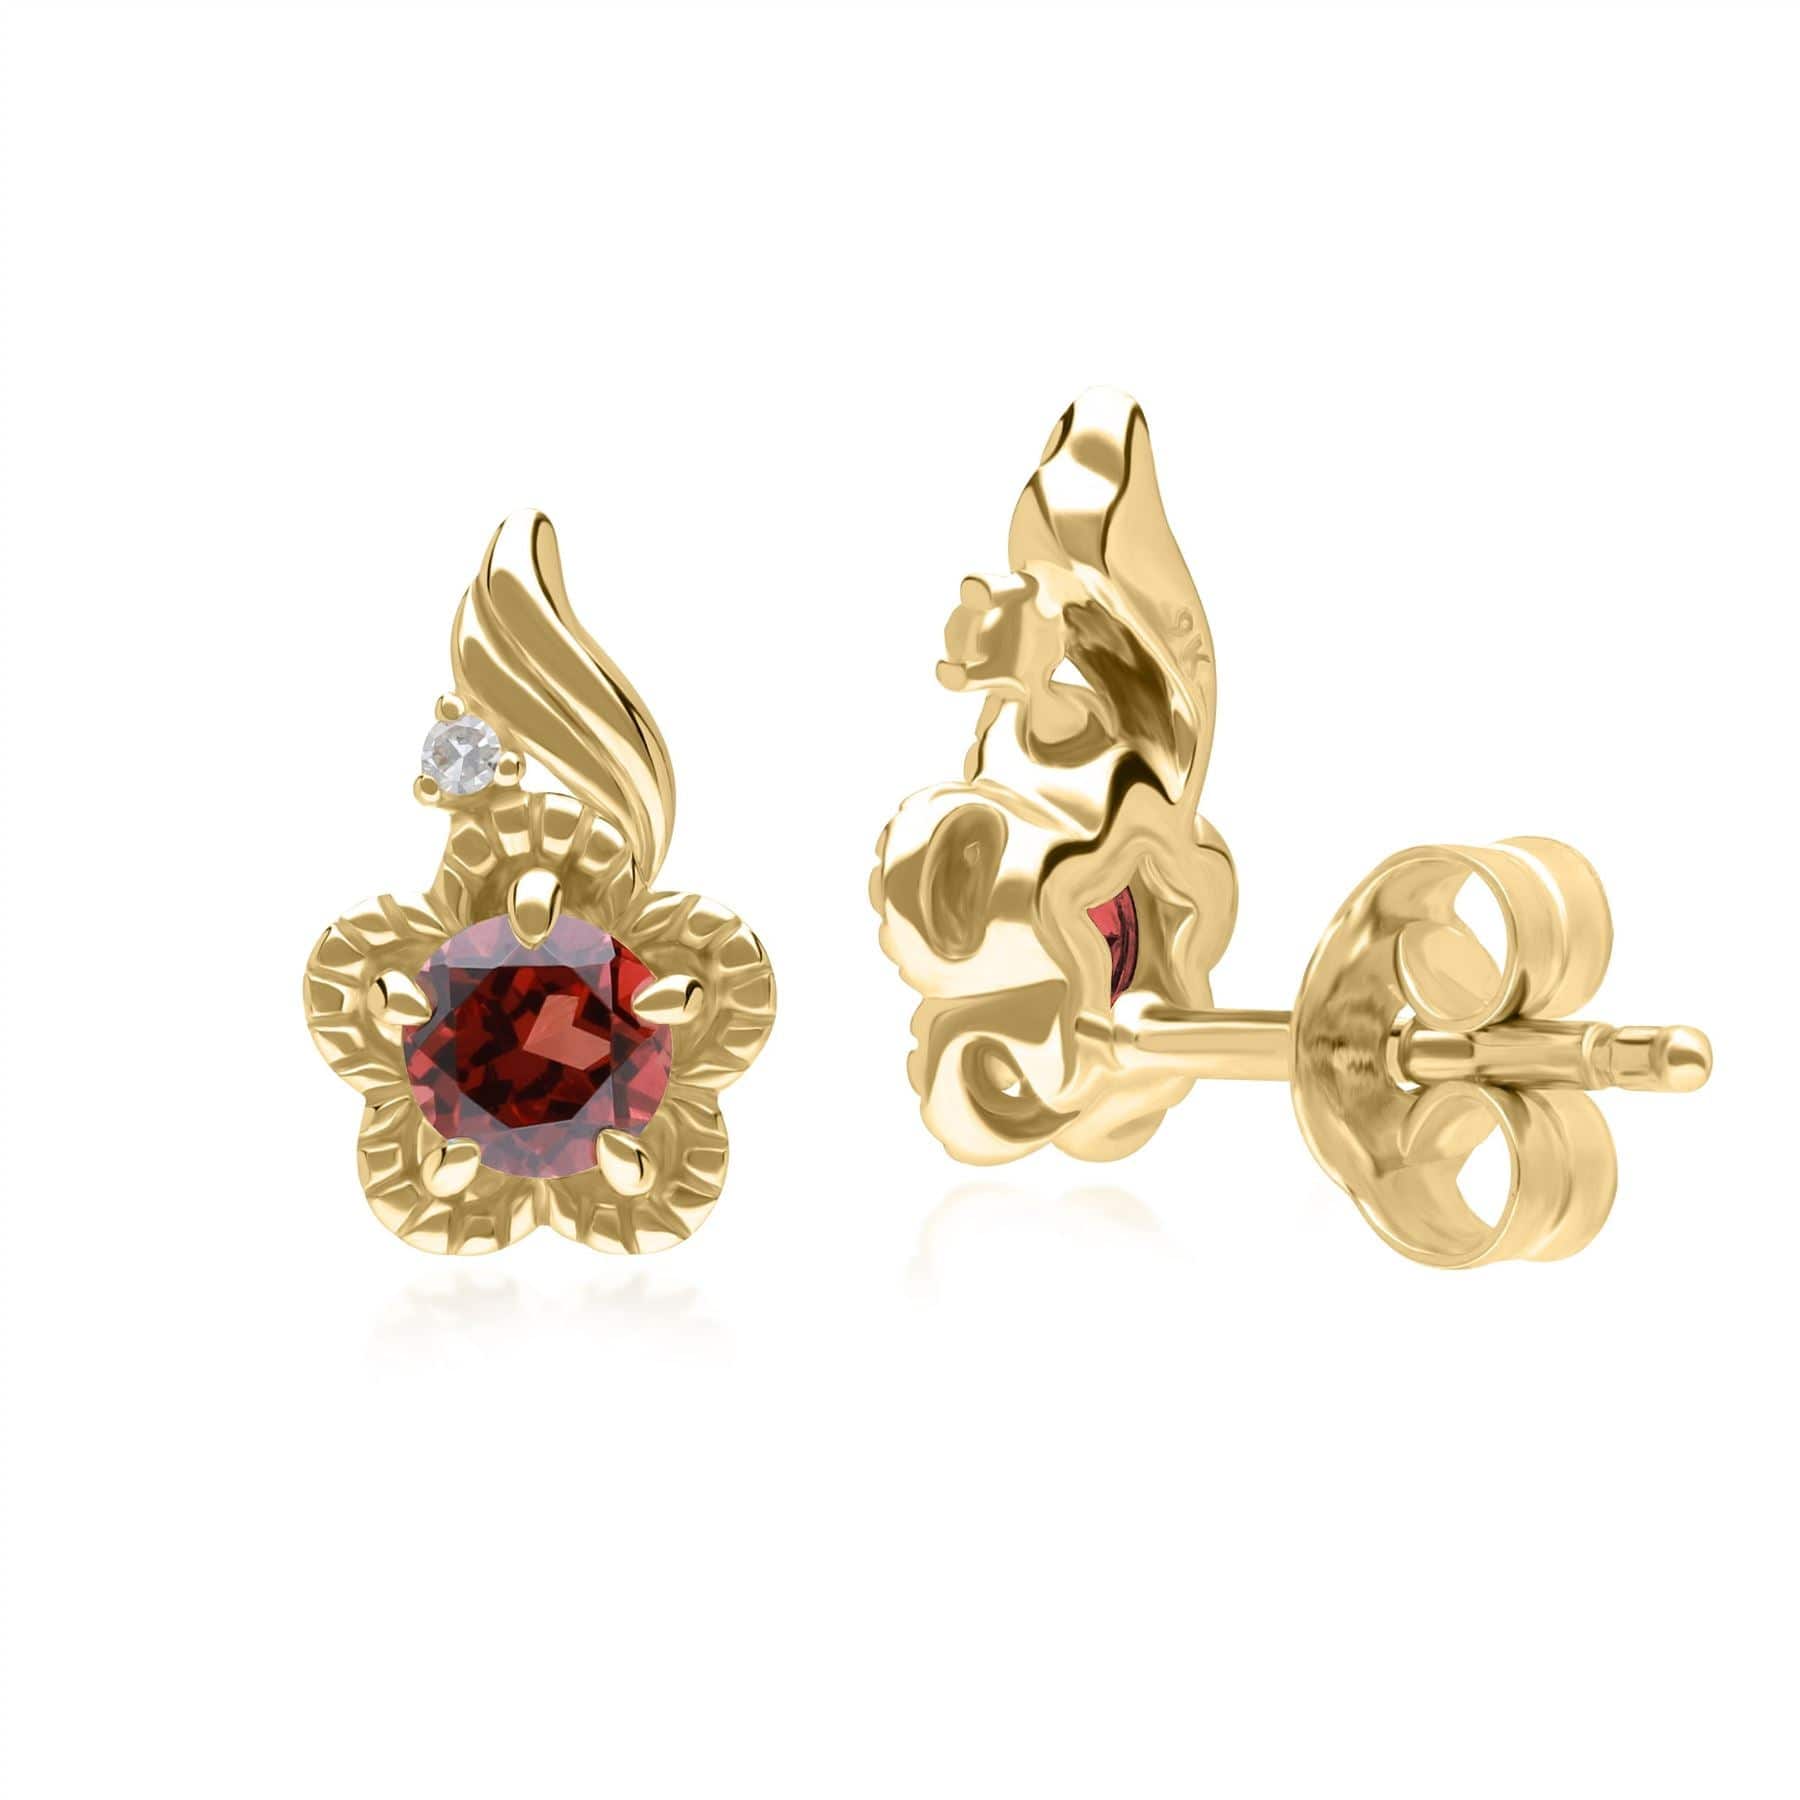 Floral Round Garnet & Diamond Stud Earrings in 9ct Yellow Gold - Gemondo